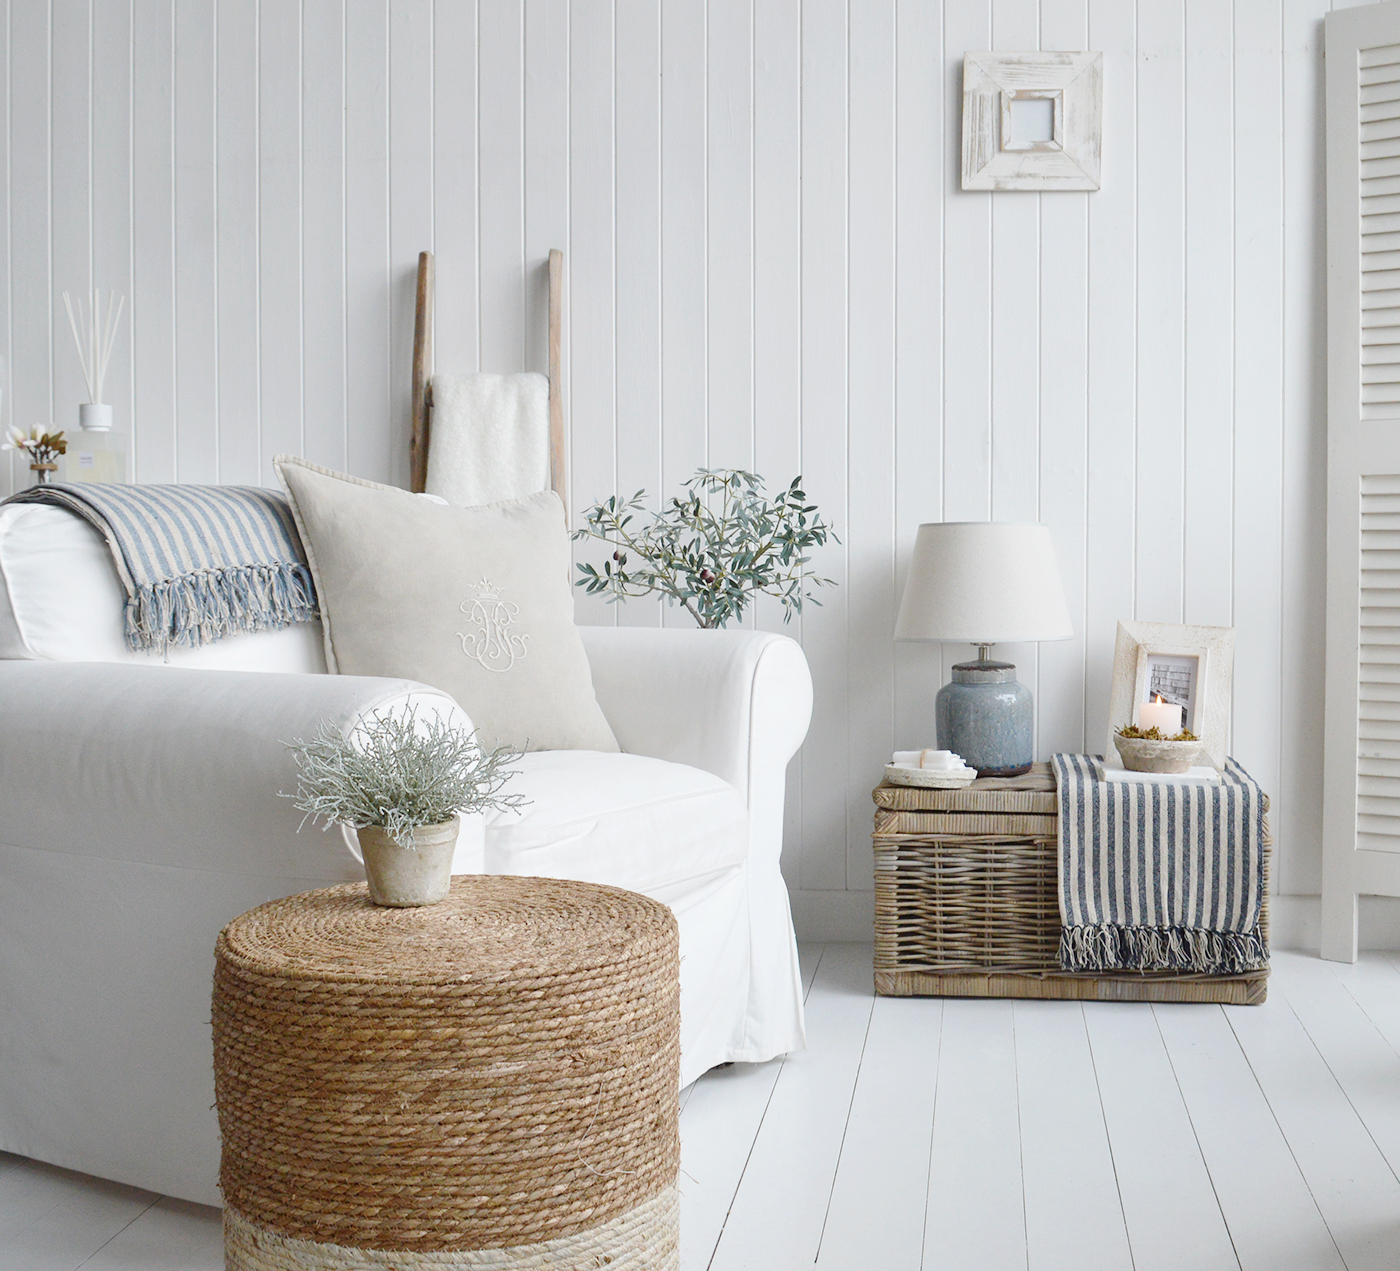 A blue and white living room with a subtle Hamptons coastal vibe